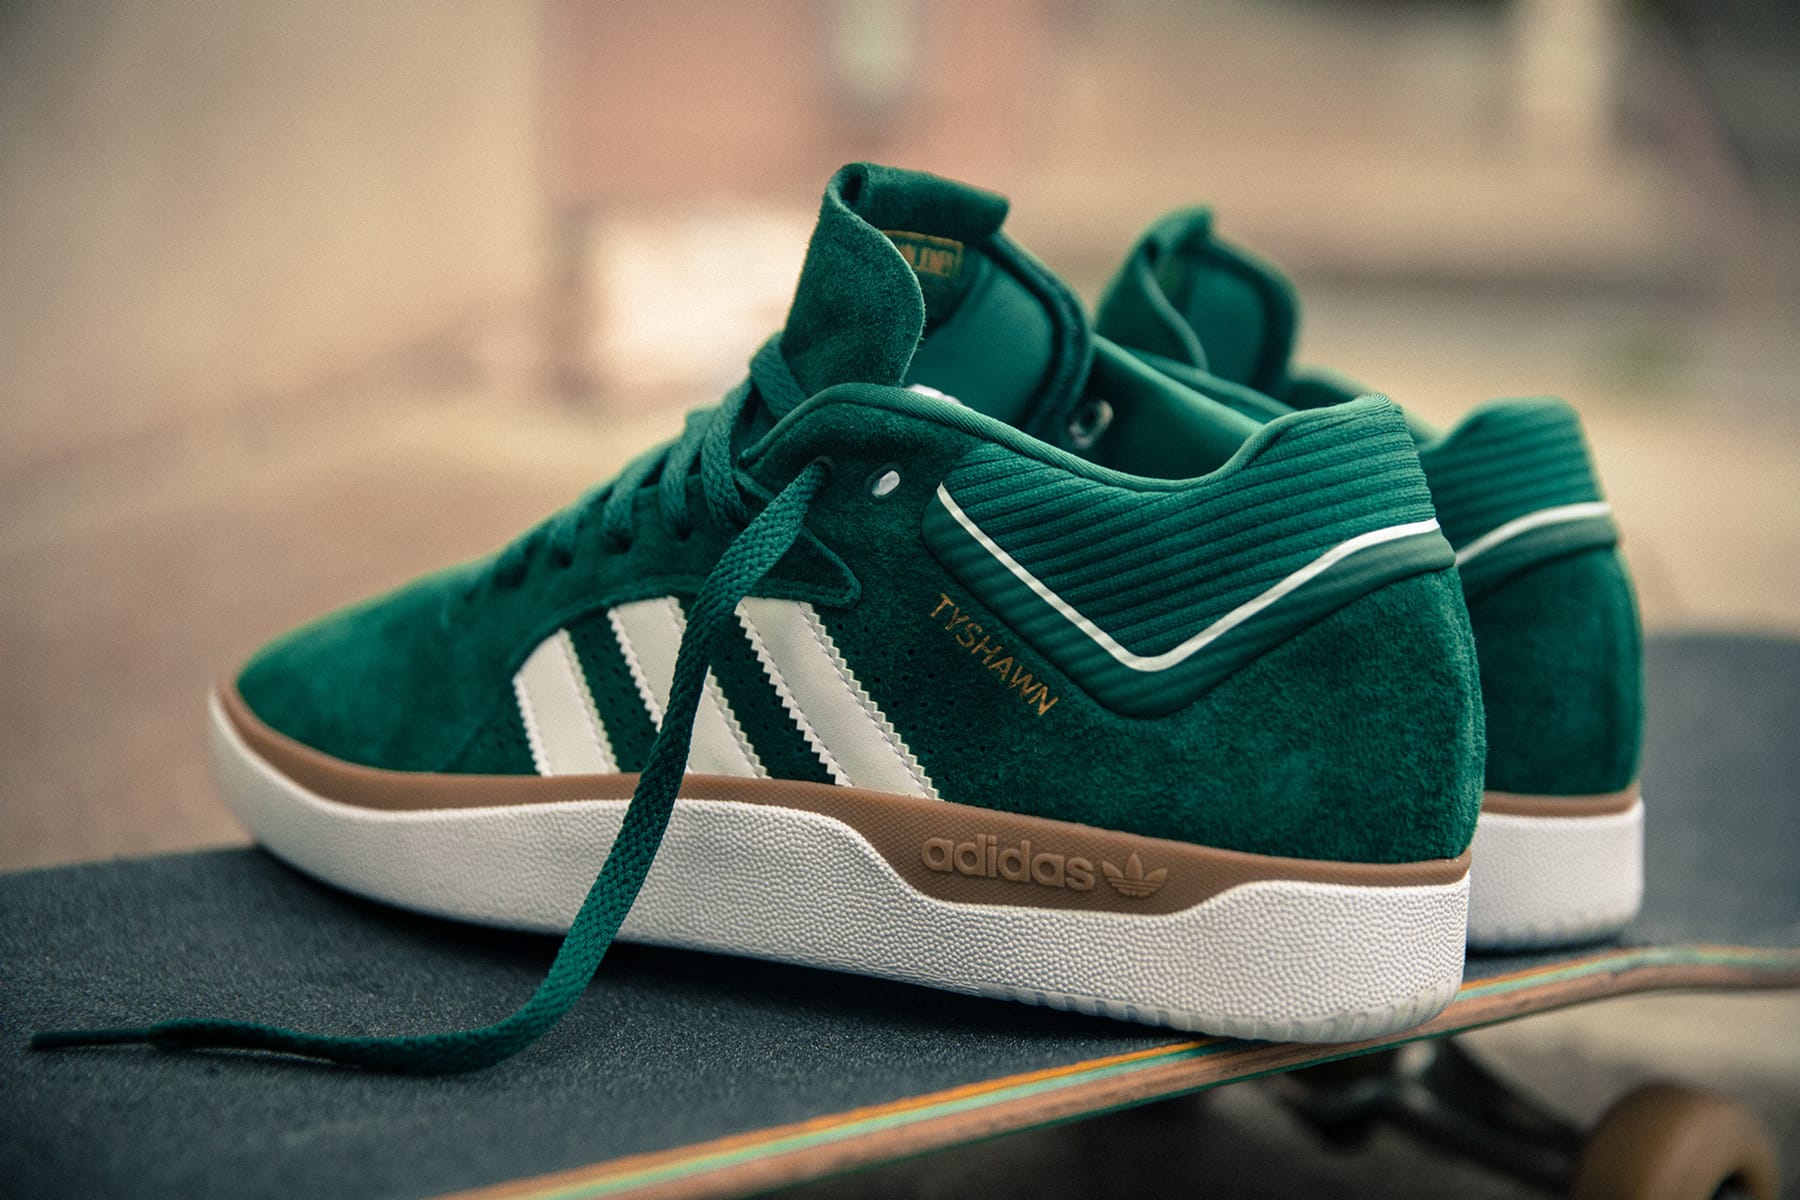 green adidas skate shoes